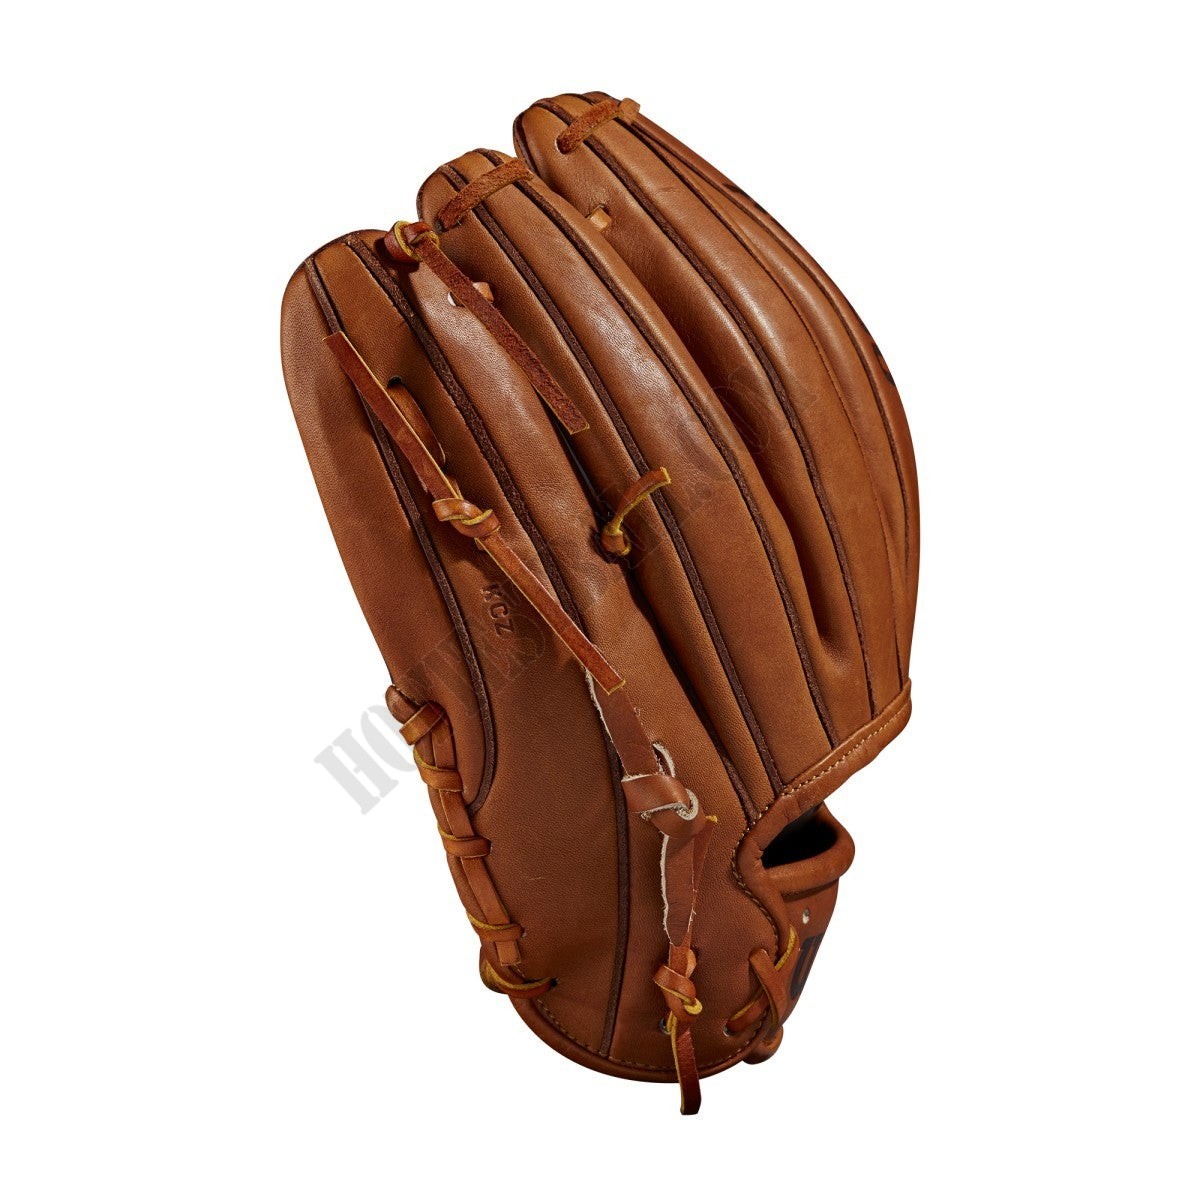 2021 A2000 1786 Laredo 11.5"Infield Baseball Glove - Right Hand Throw ● Wilson Promotions - -4